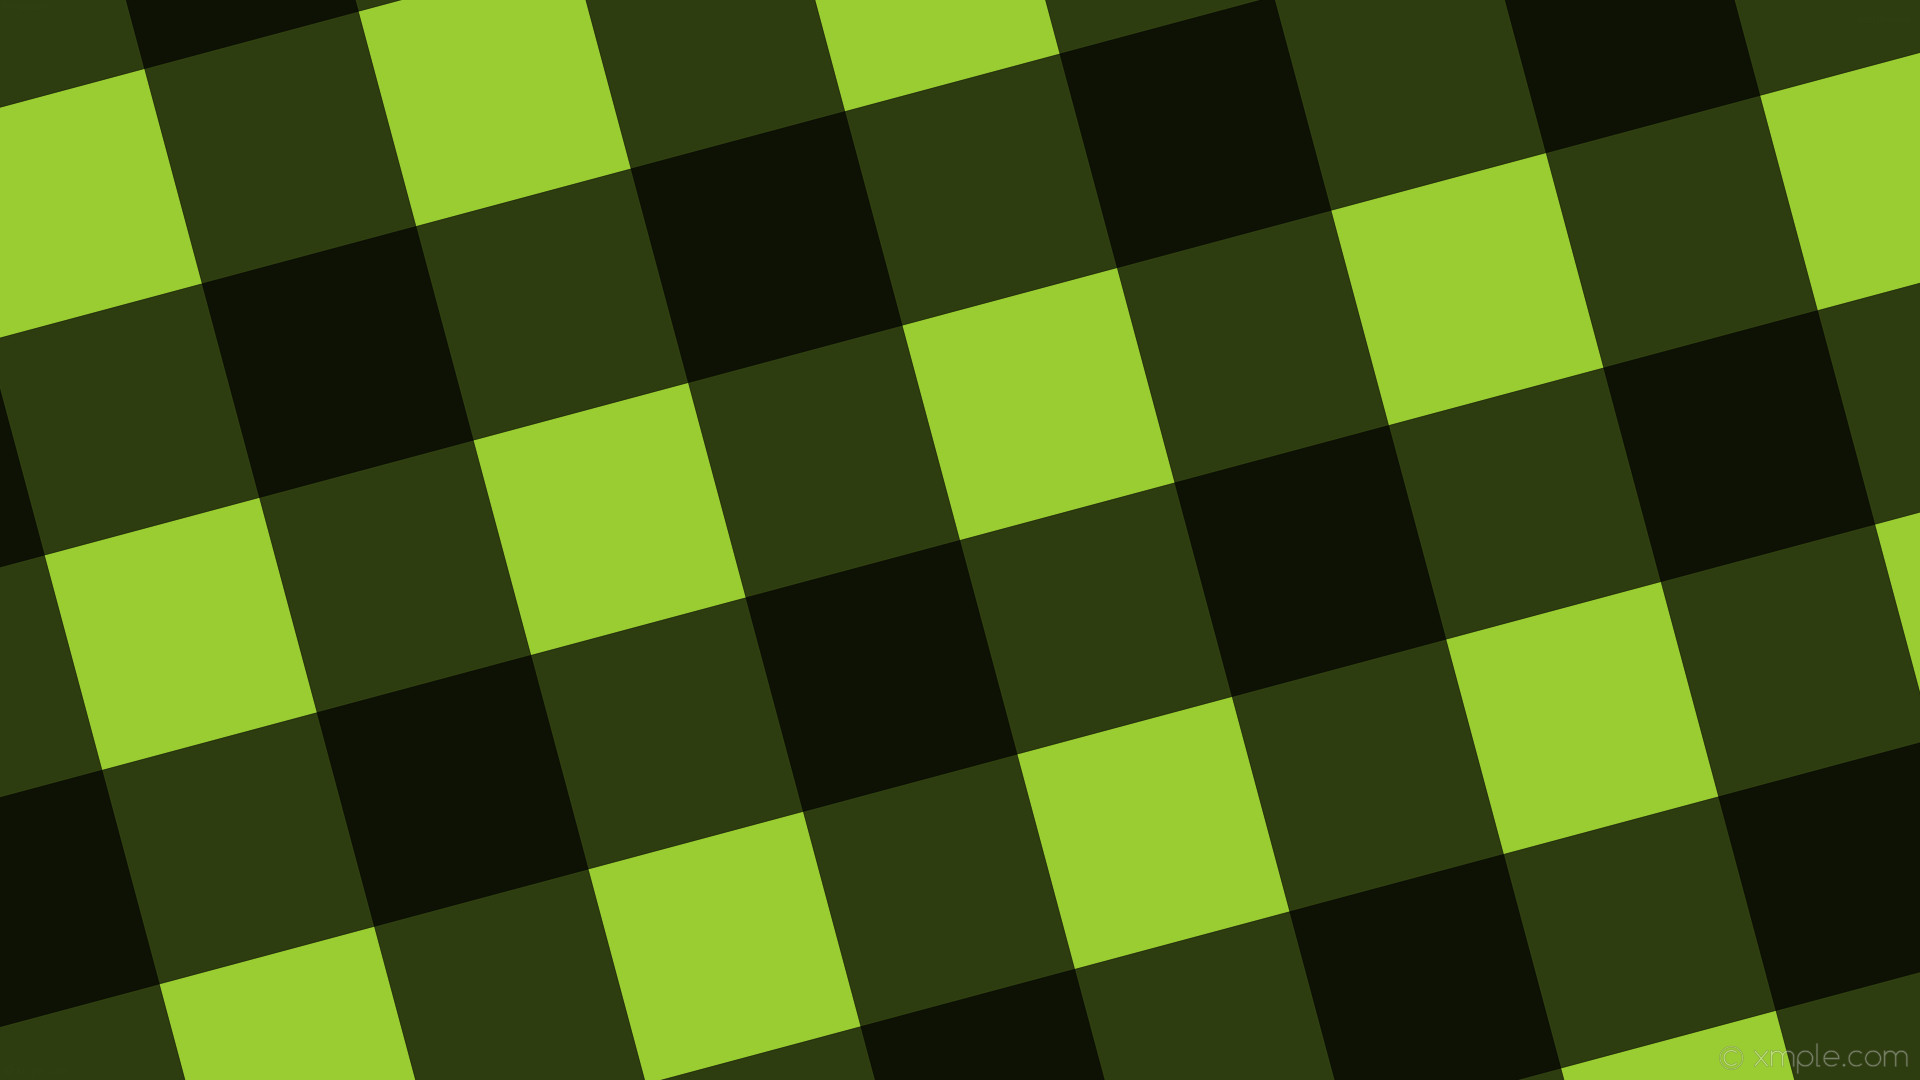 1920x1080 wallpaper black gingham green checker striped yellow green #9acd32 #000000  285Â° 222px